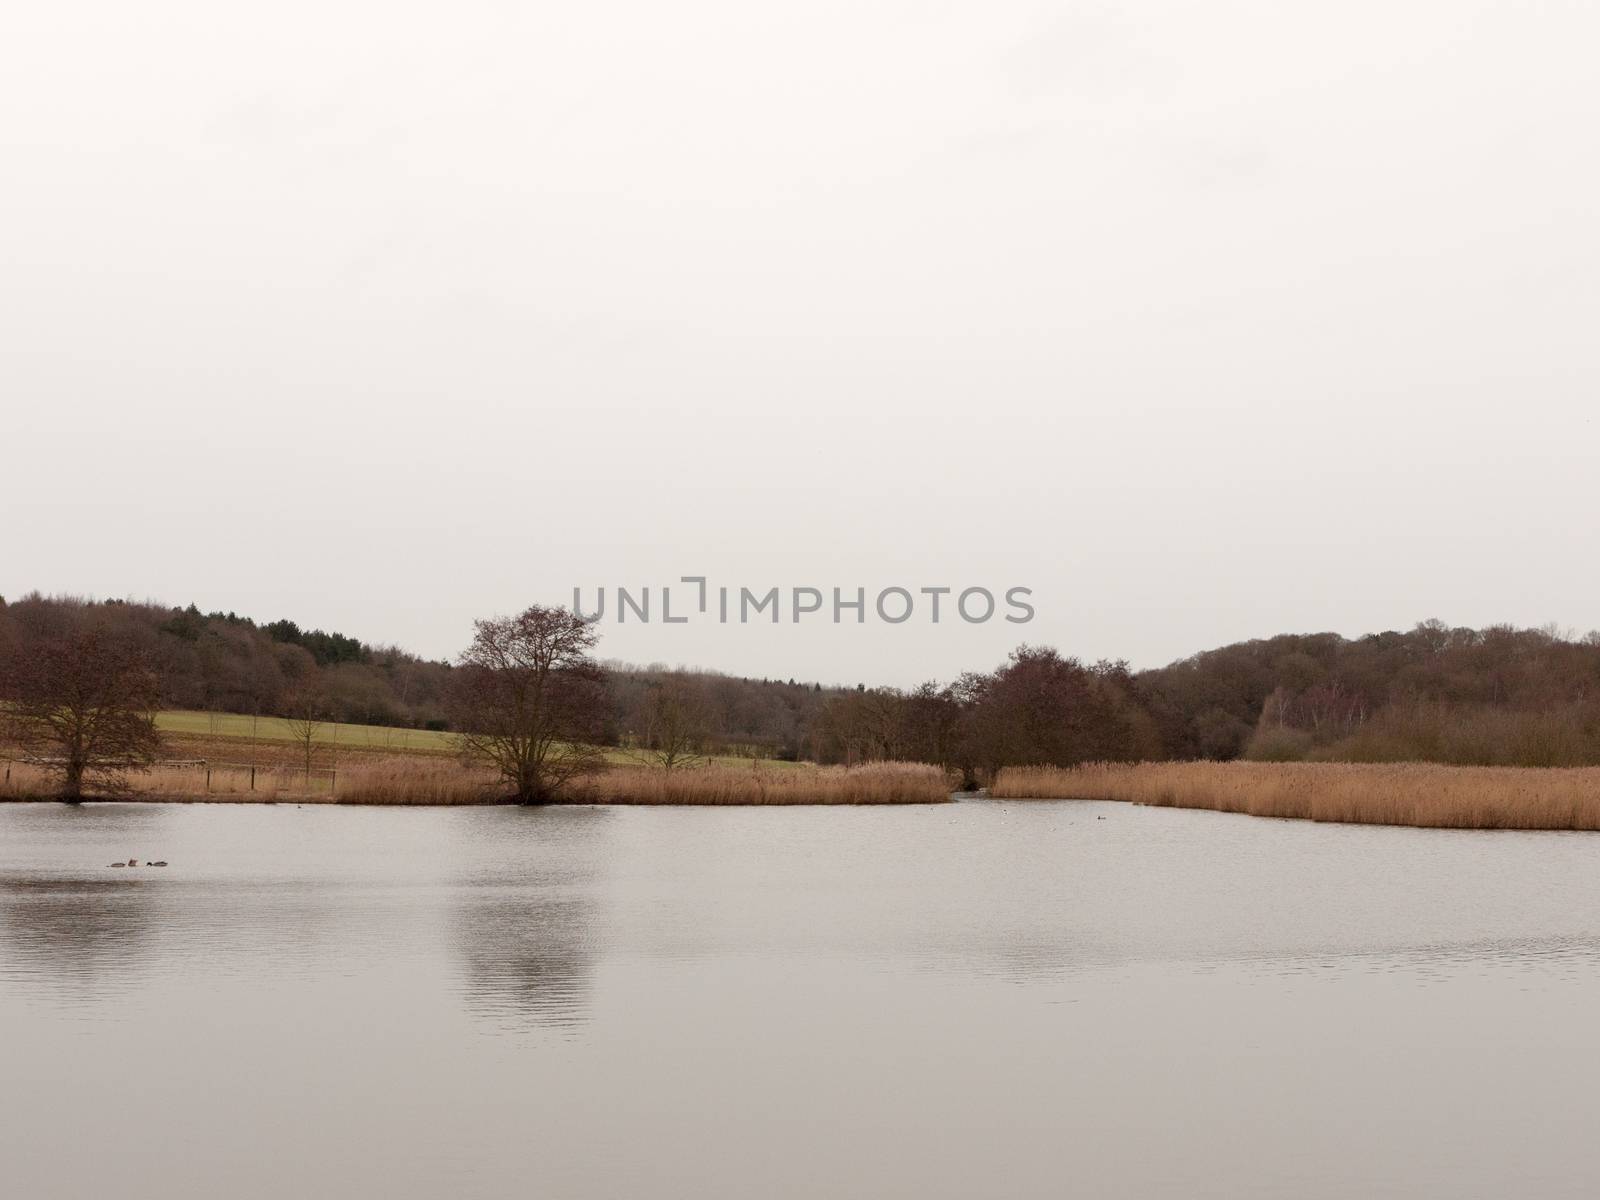 bleak cold white sky winter lake serene country landscape depressing; essex; england; uk